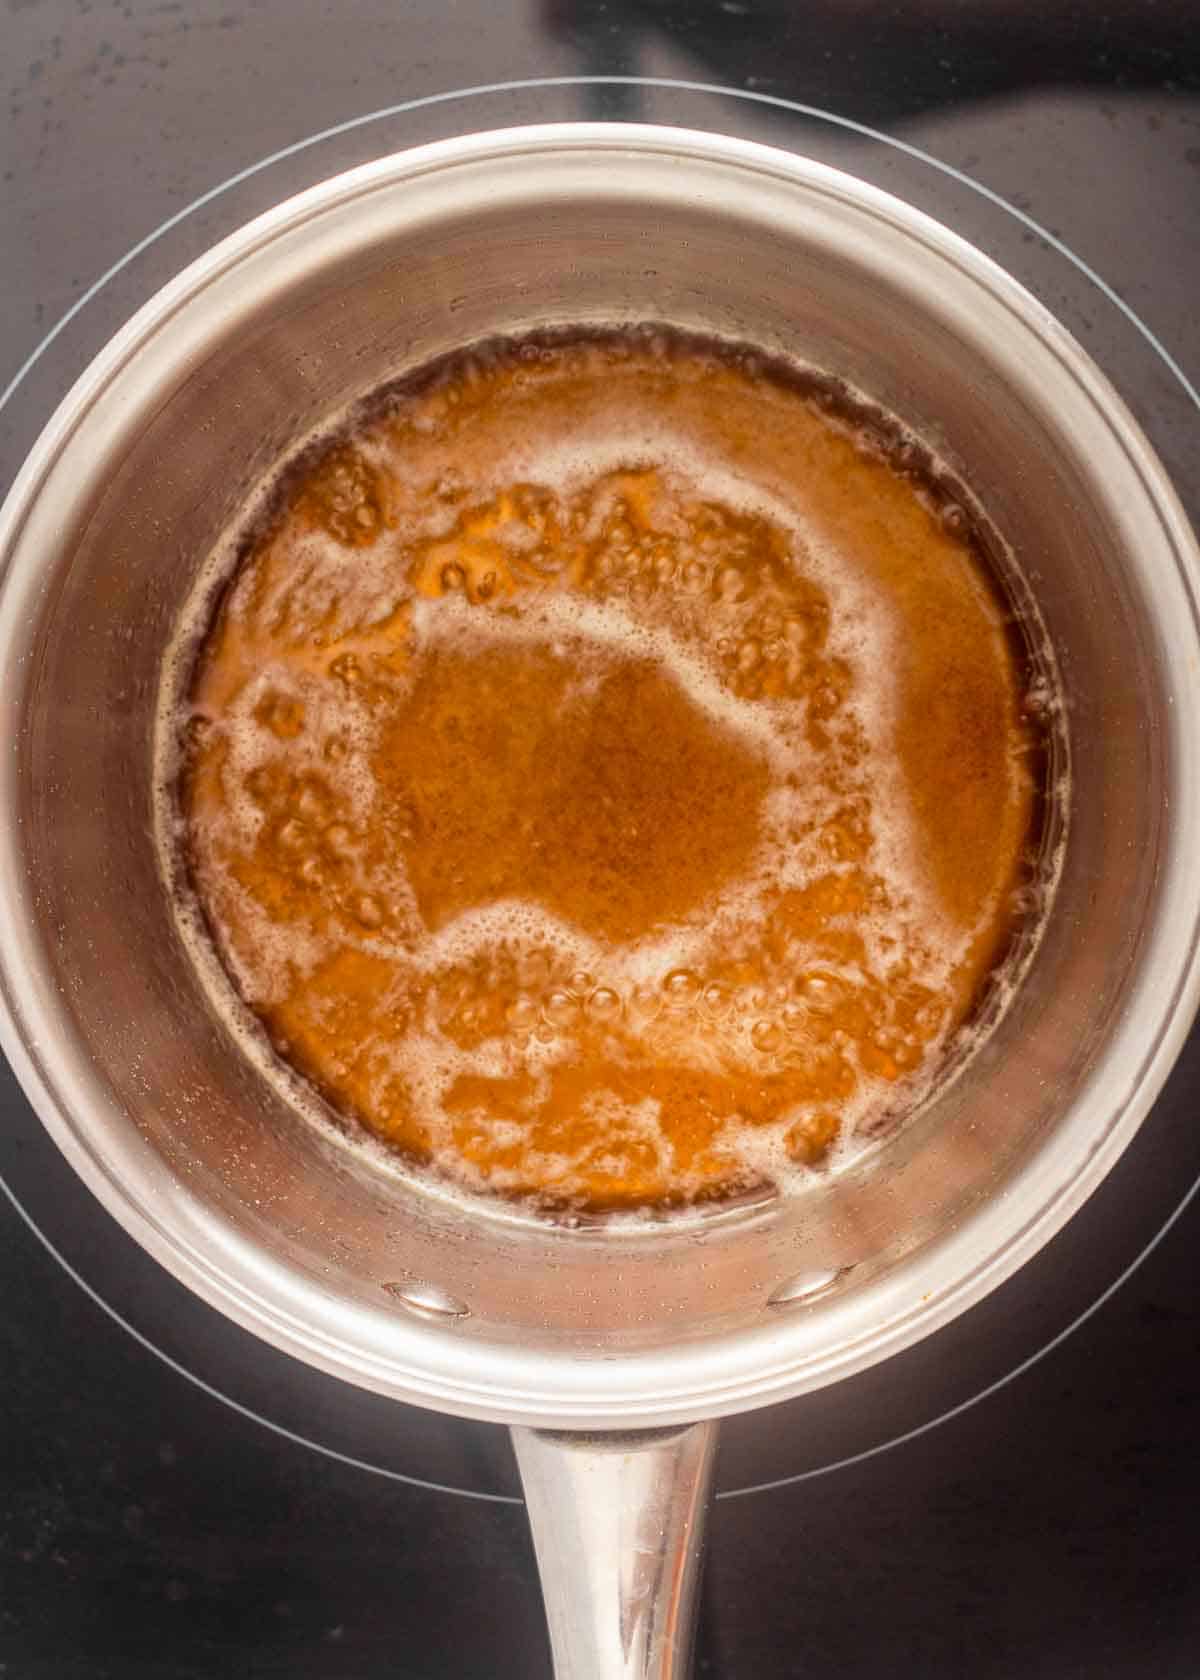 Caramel sauce simmering in a saucepan.